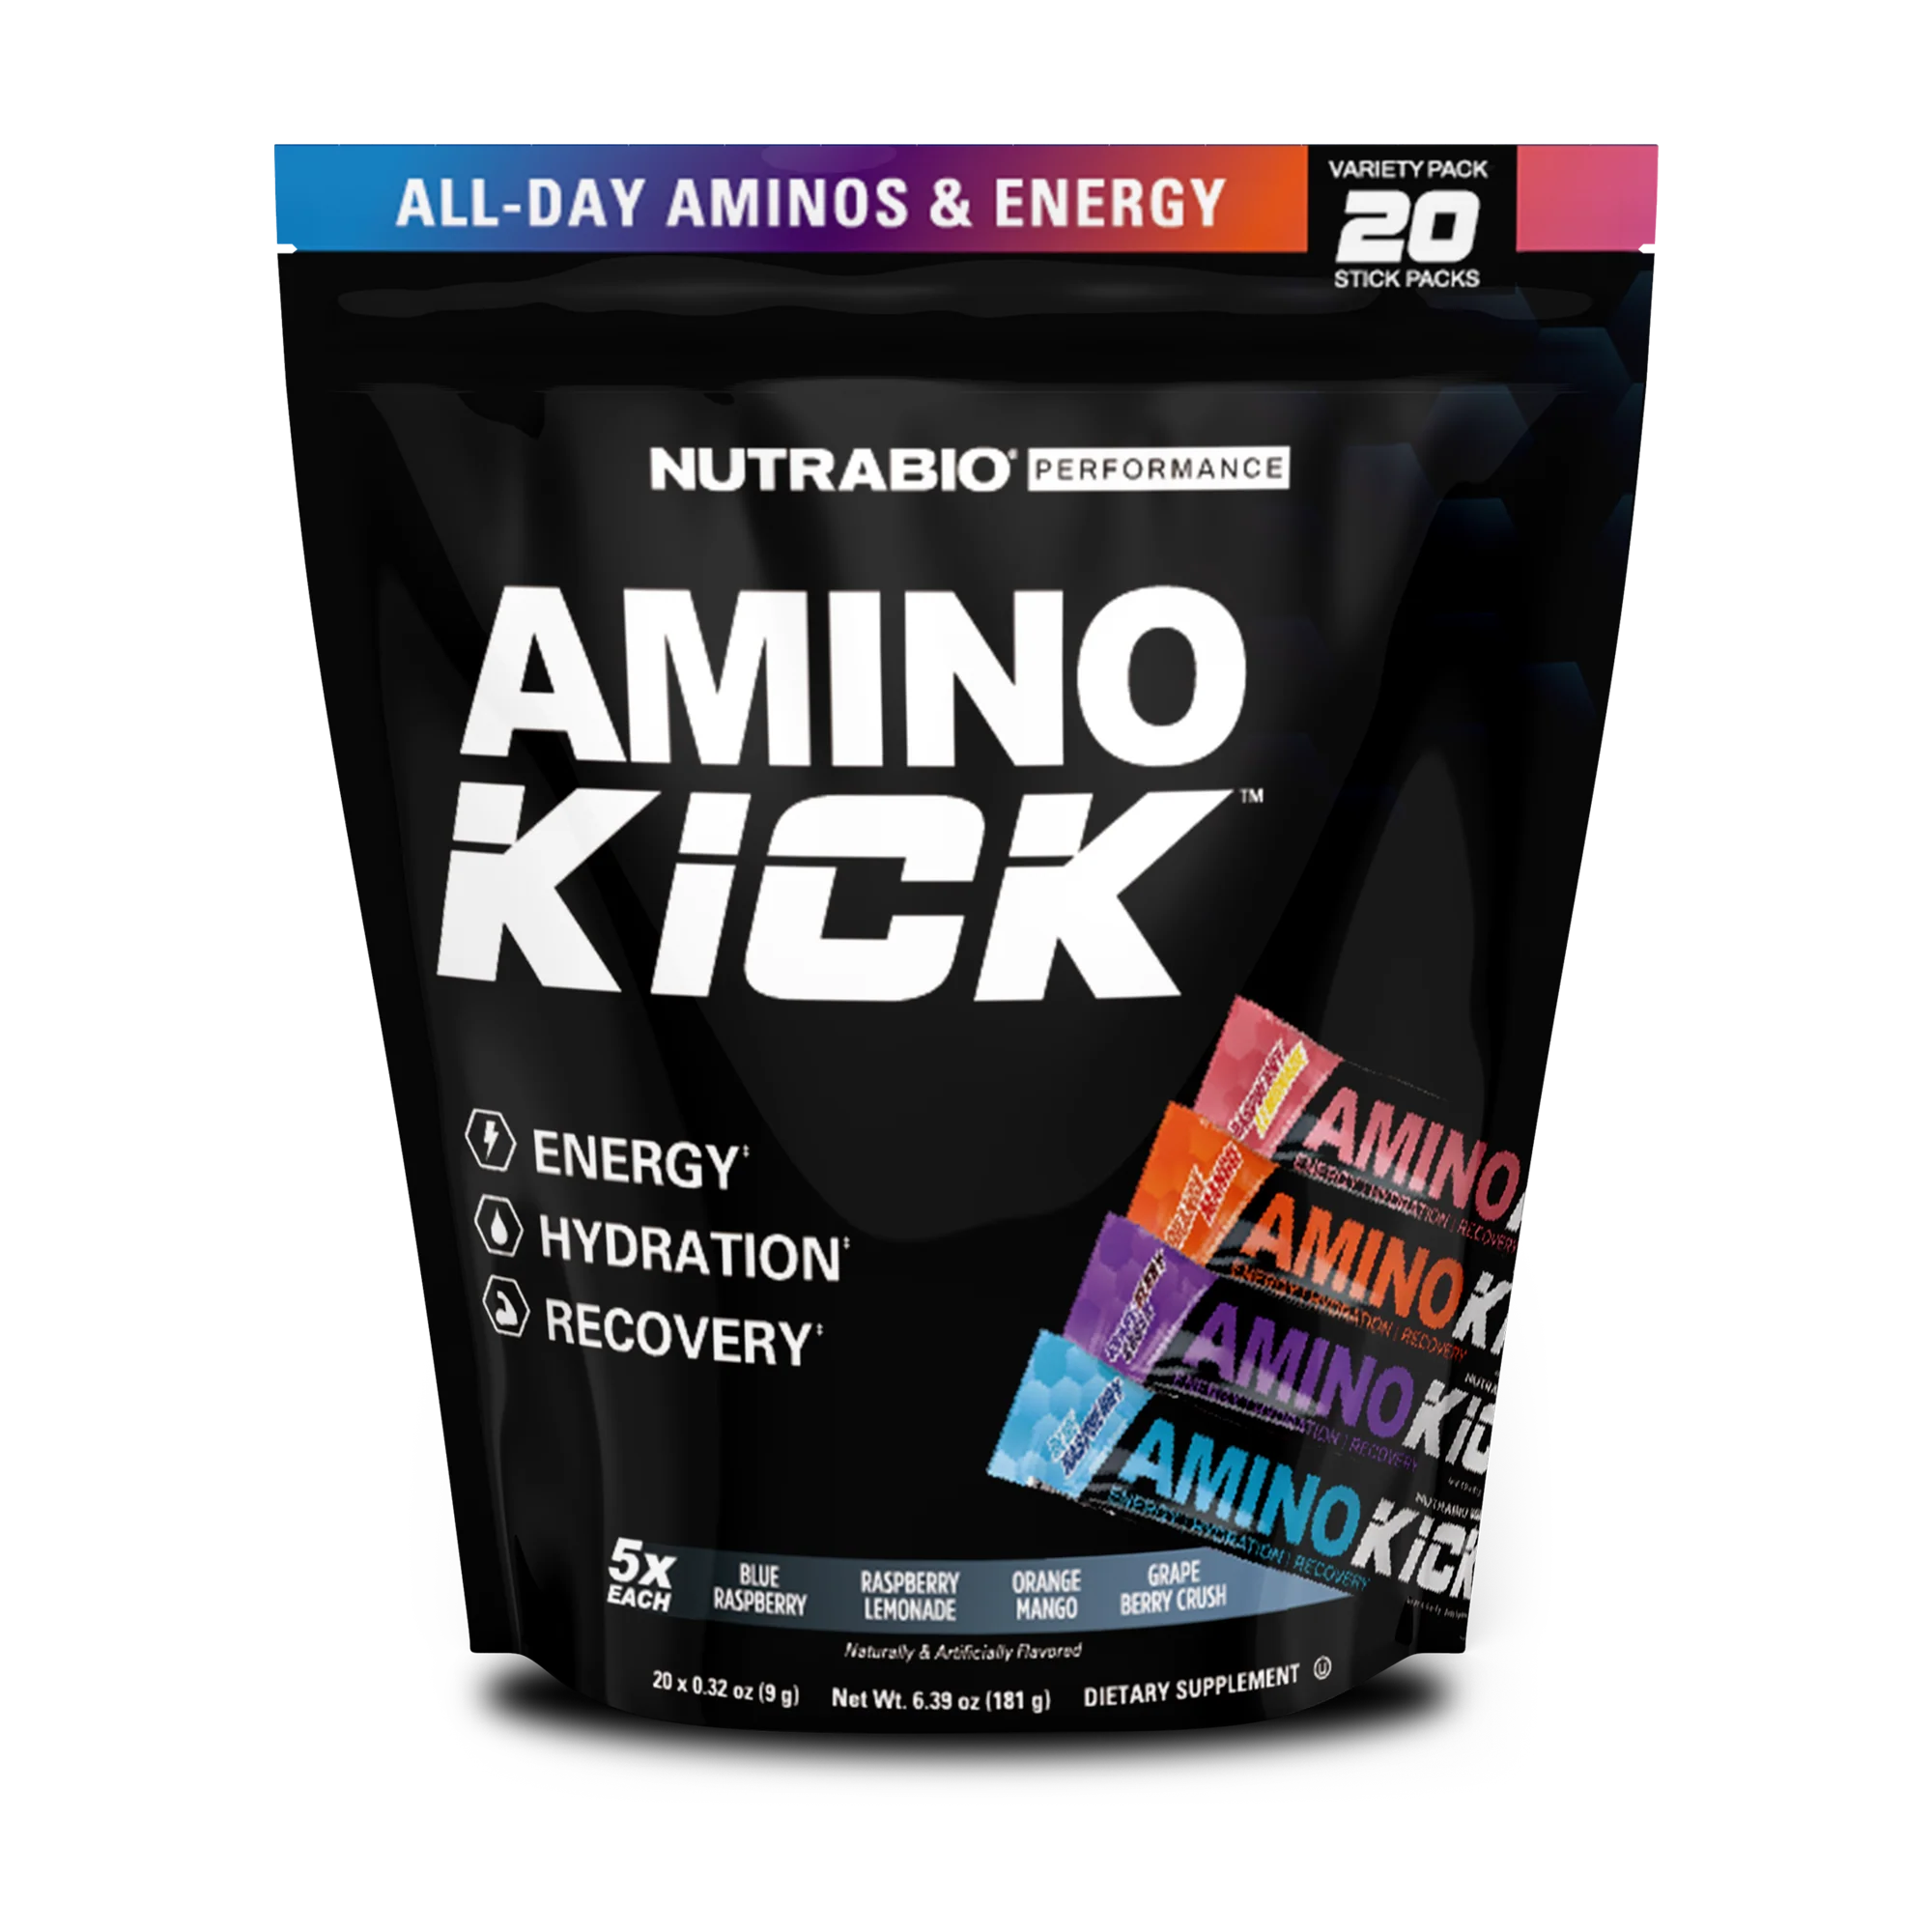 Nutrabio | Amino Kick Stick Pack Bag